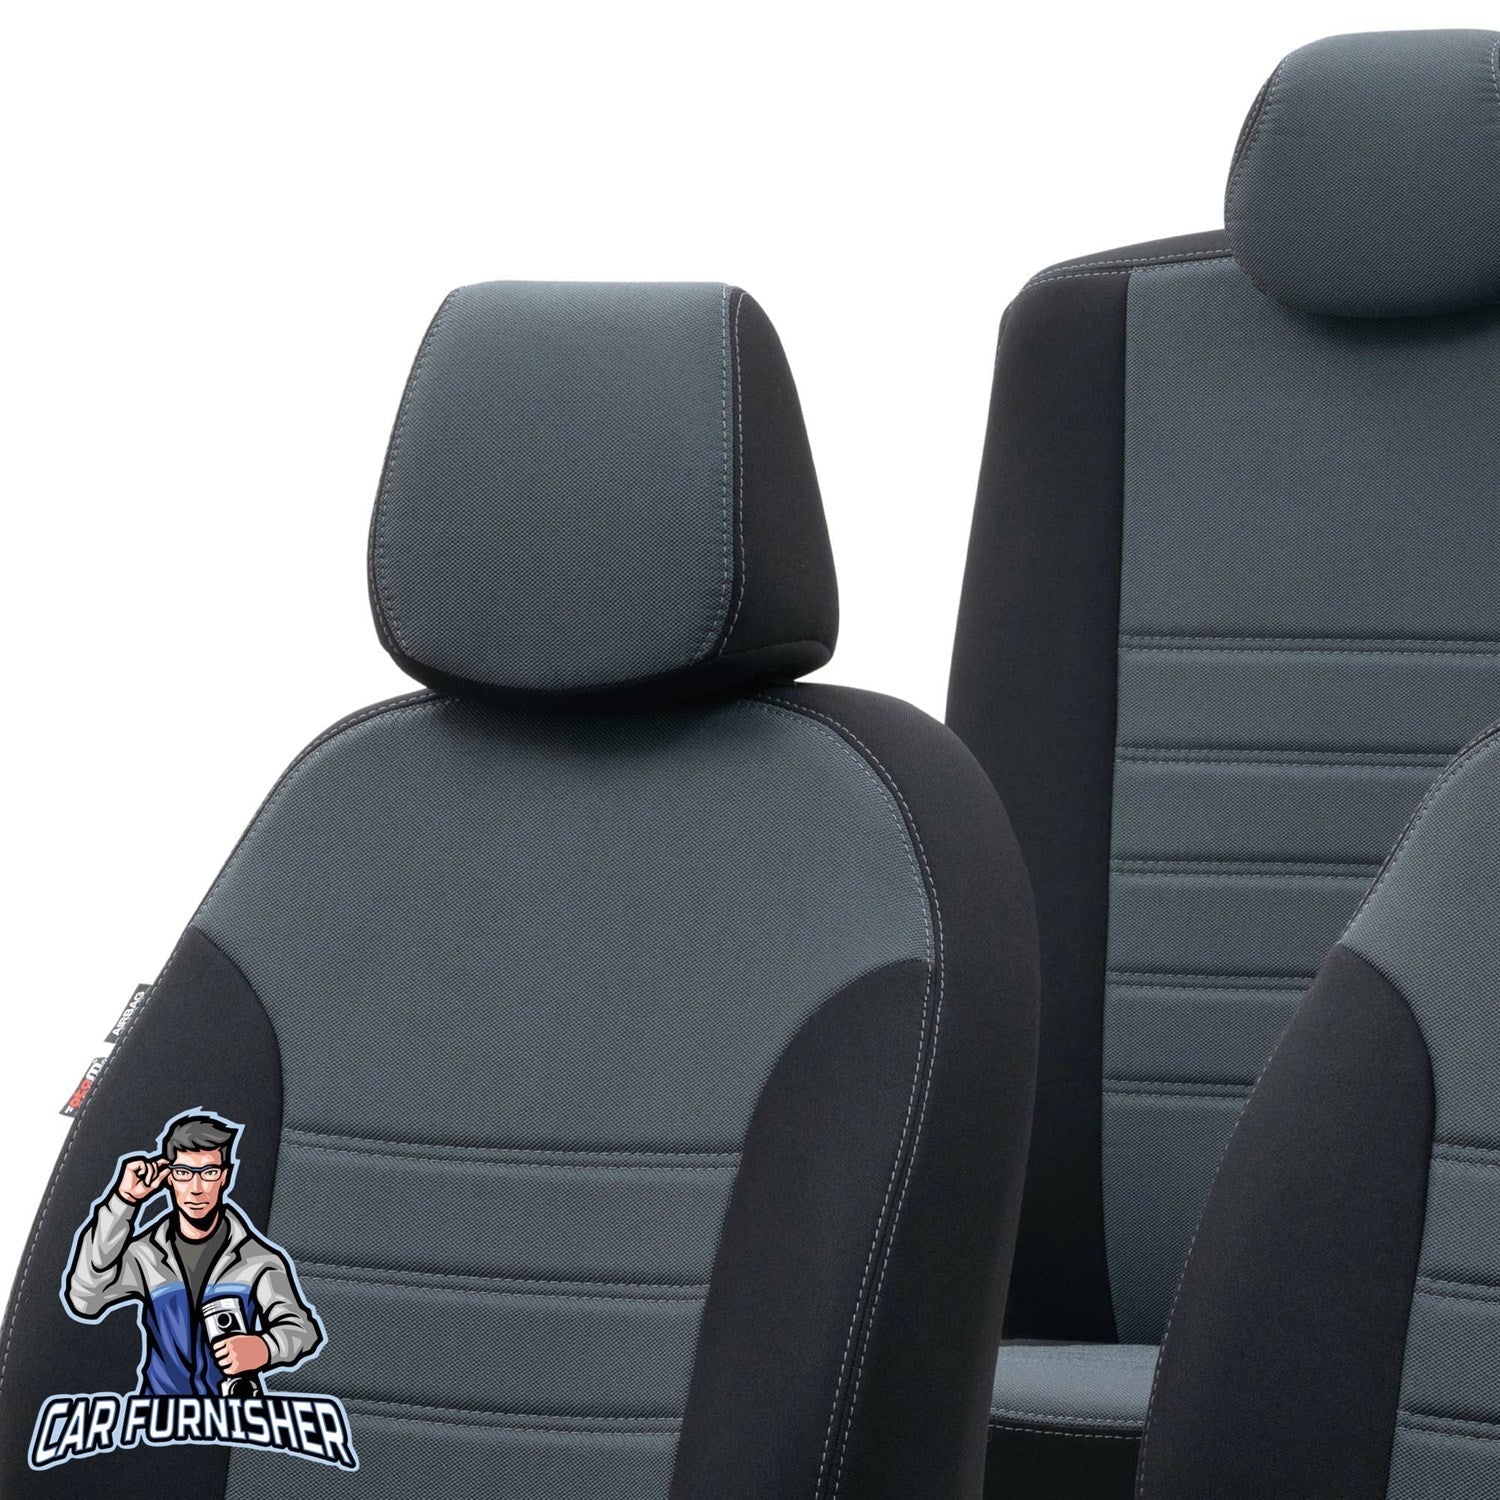 Fiat Ducato Seat Covers Original Jacquard Design Smoked Black Jacquard Fabric